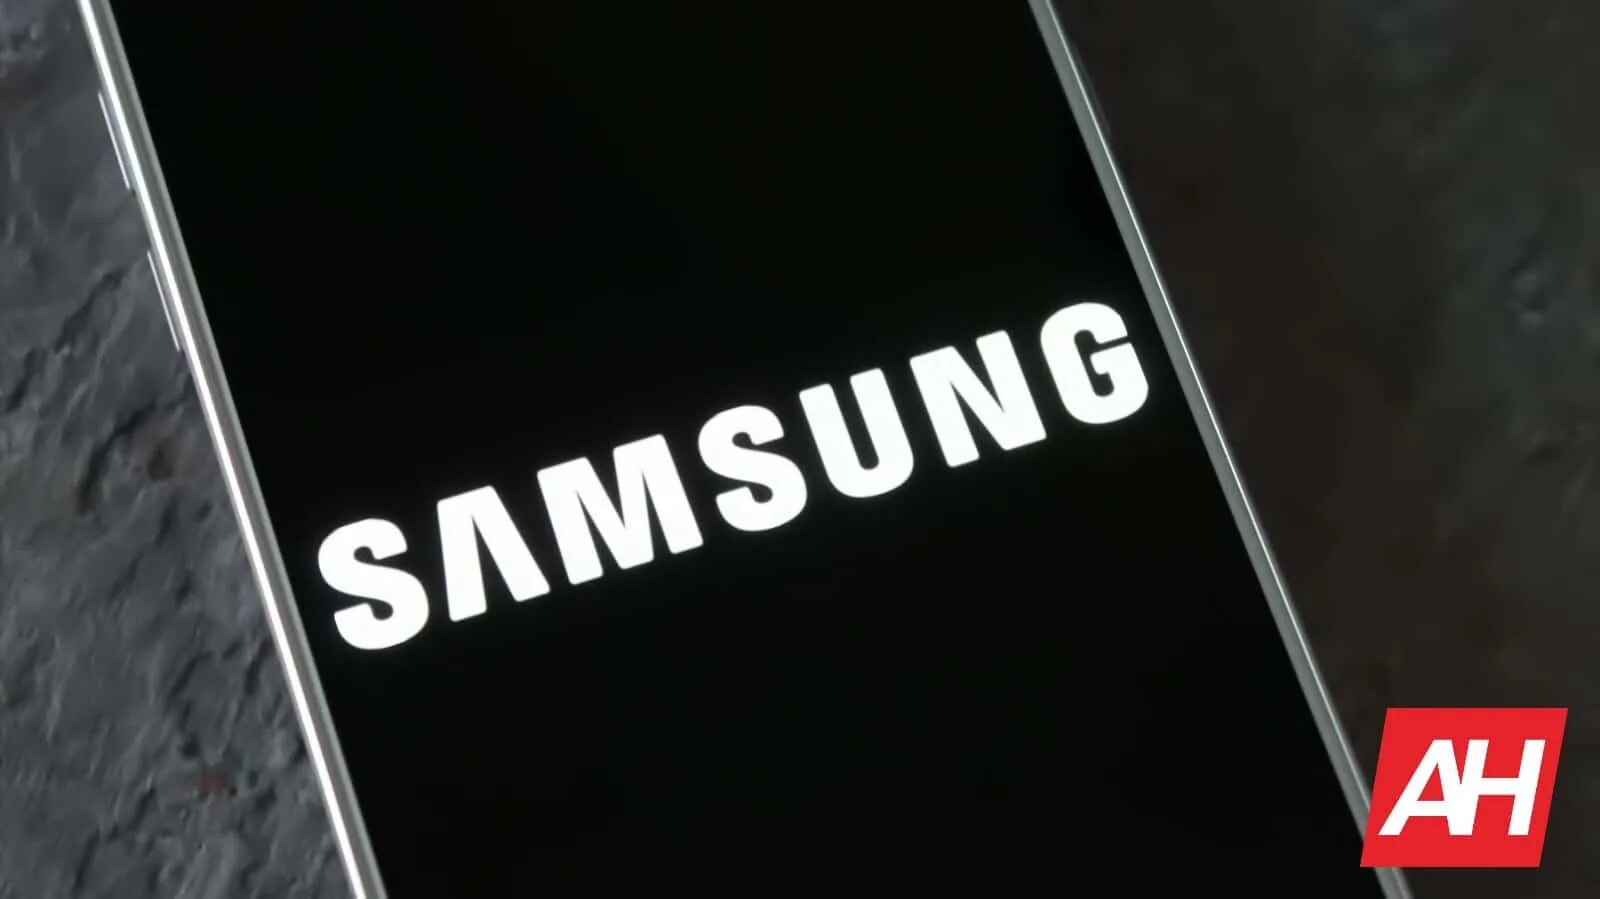 Картинки самсунг. Samsung Galaxy logo 2021. Лого самсунг галакси a 12. Надпись самсунг. Логотип самсунг на телефон.